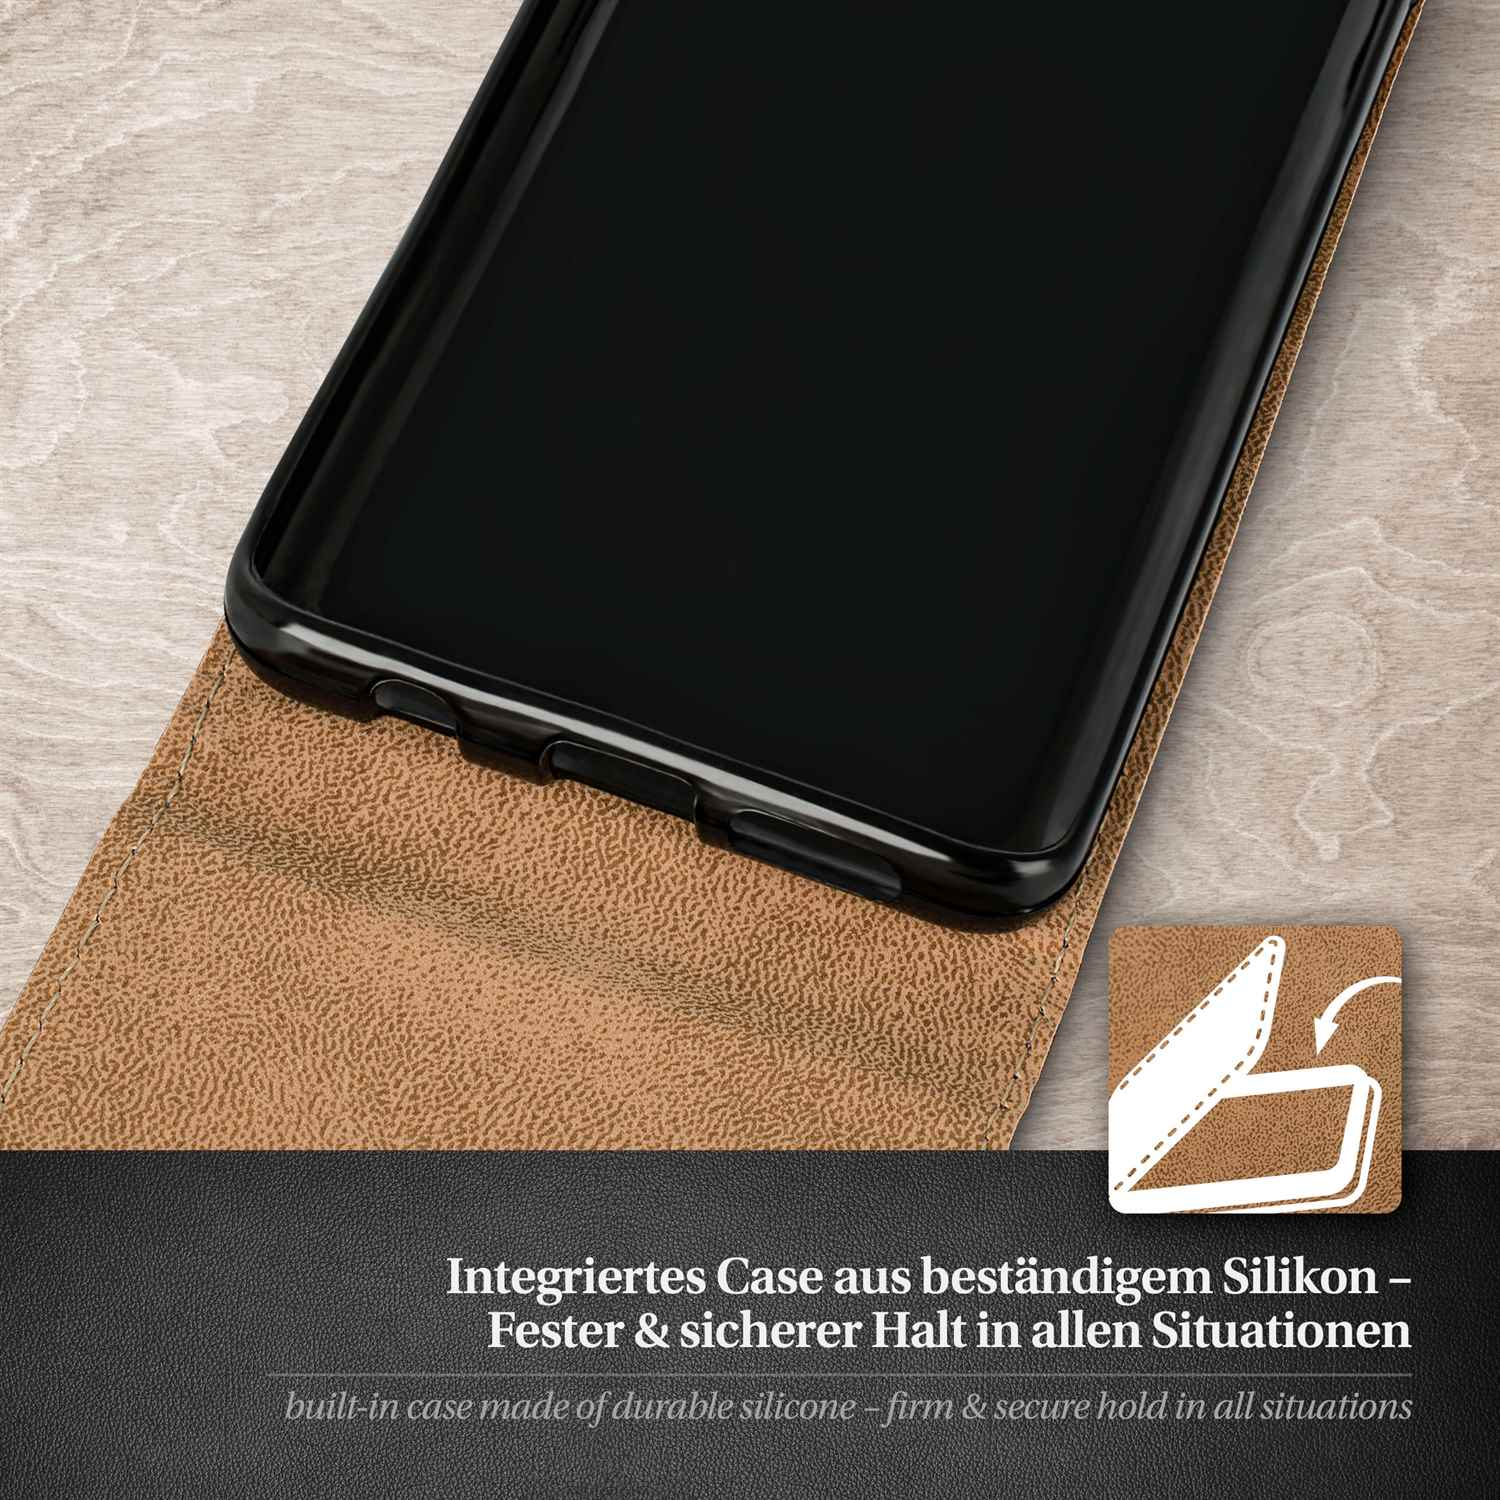 MOEX Flip Case, Flip Cover, Ultra, S20 Galaxy Berry-Fuchsia Samsung